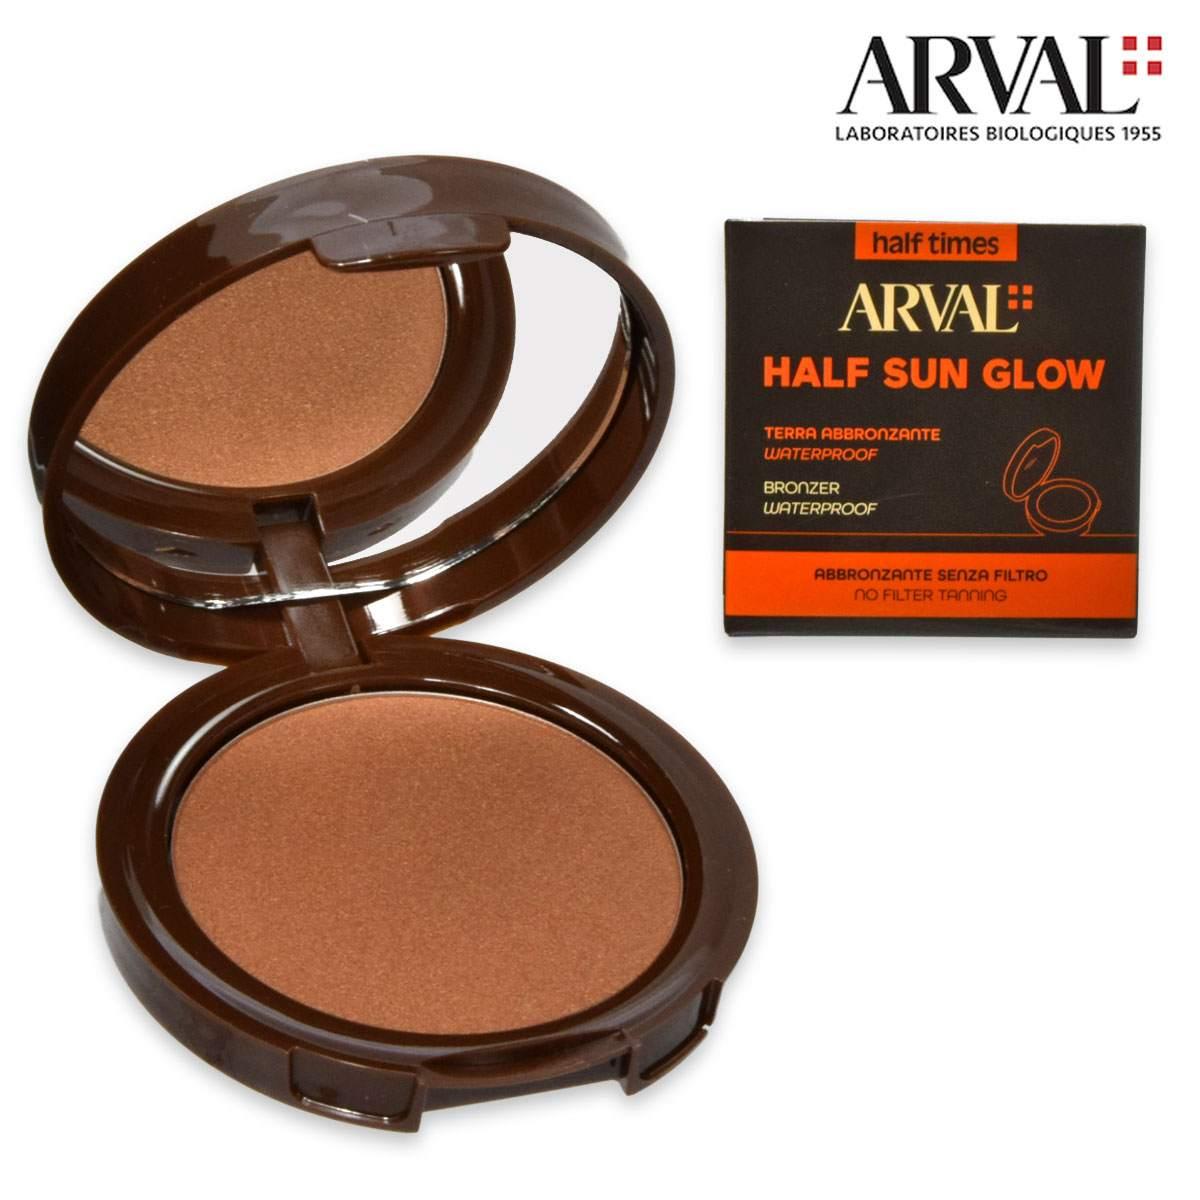 Arval half times - half sun glow terra abbronzante waterproof